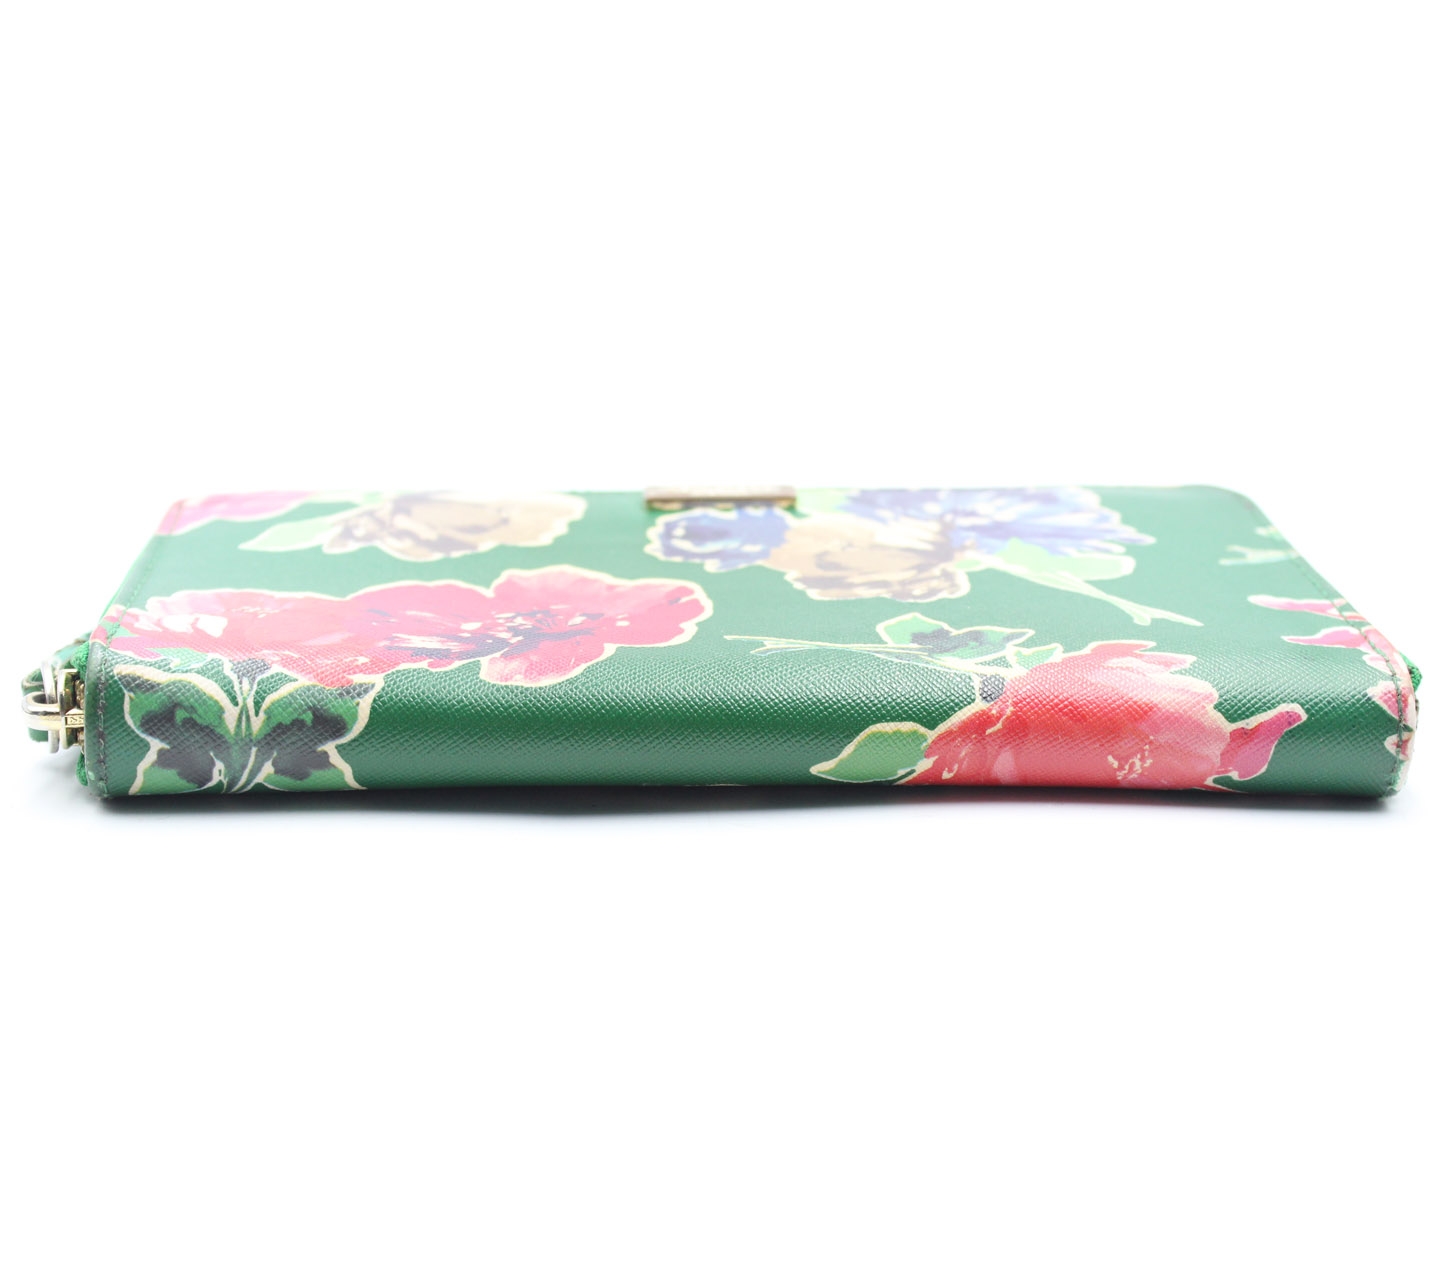 Kate Spade Green Floral Wallet